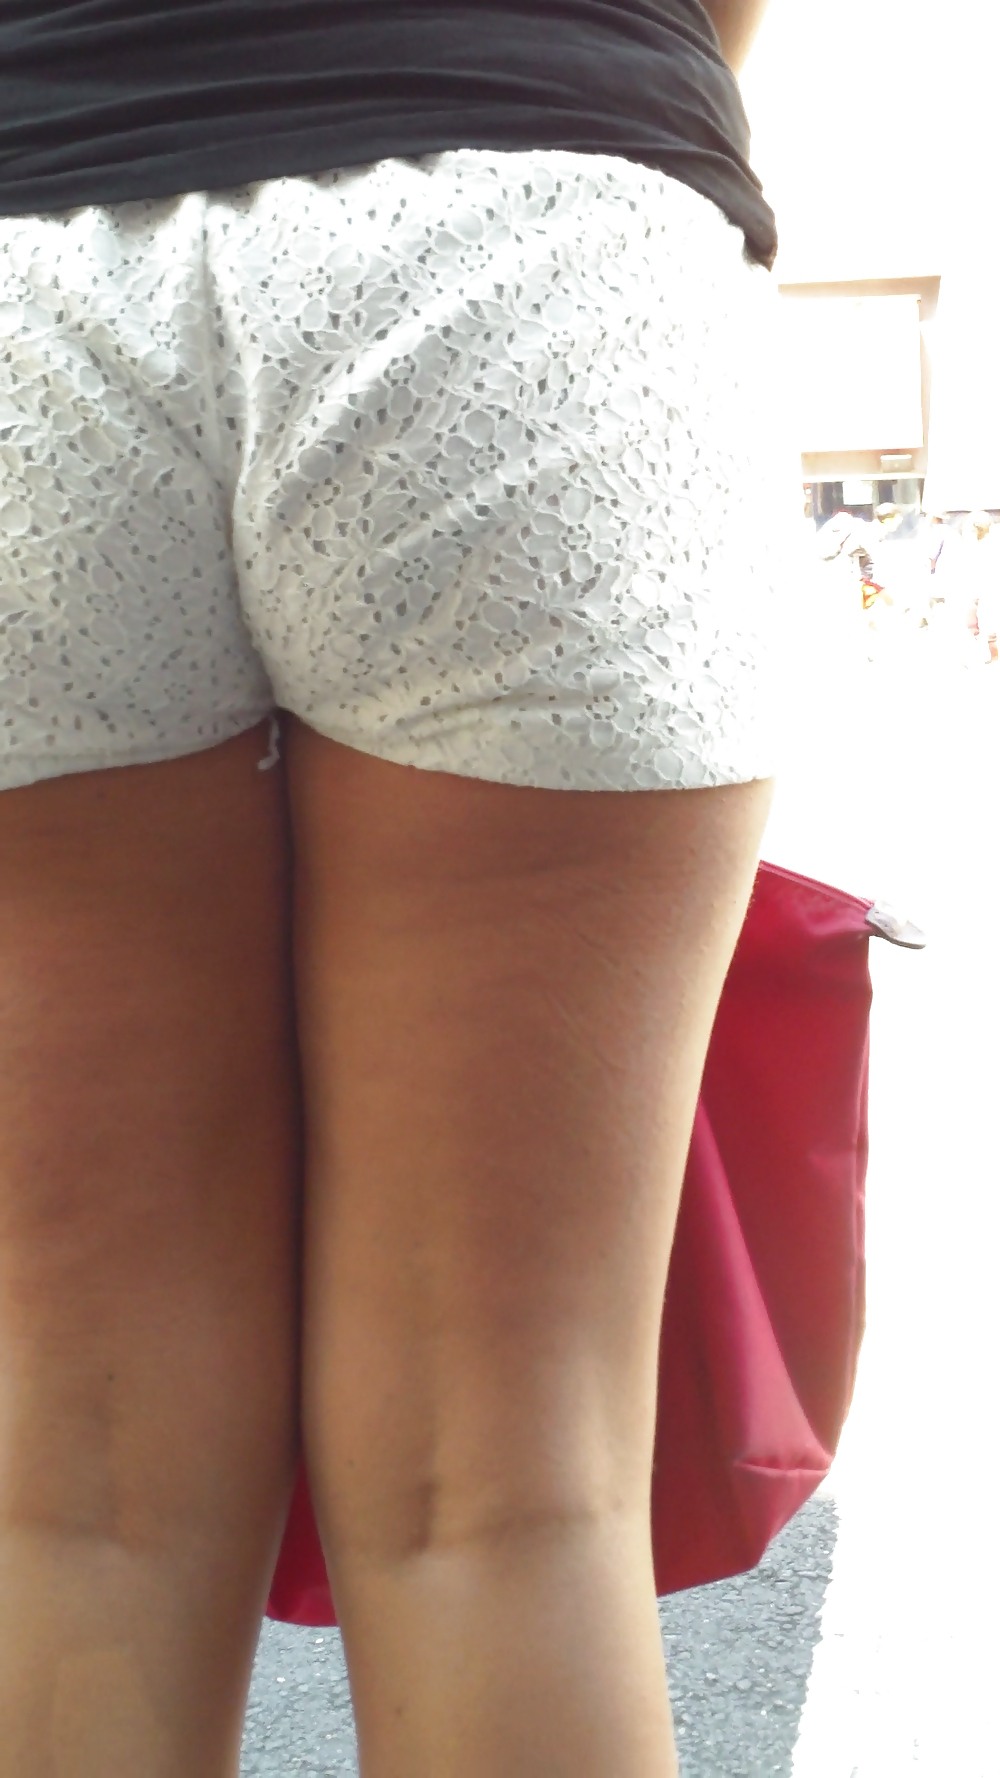 Some nice public butt cracks & ass cheeks in shorts  #21359520